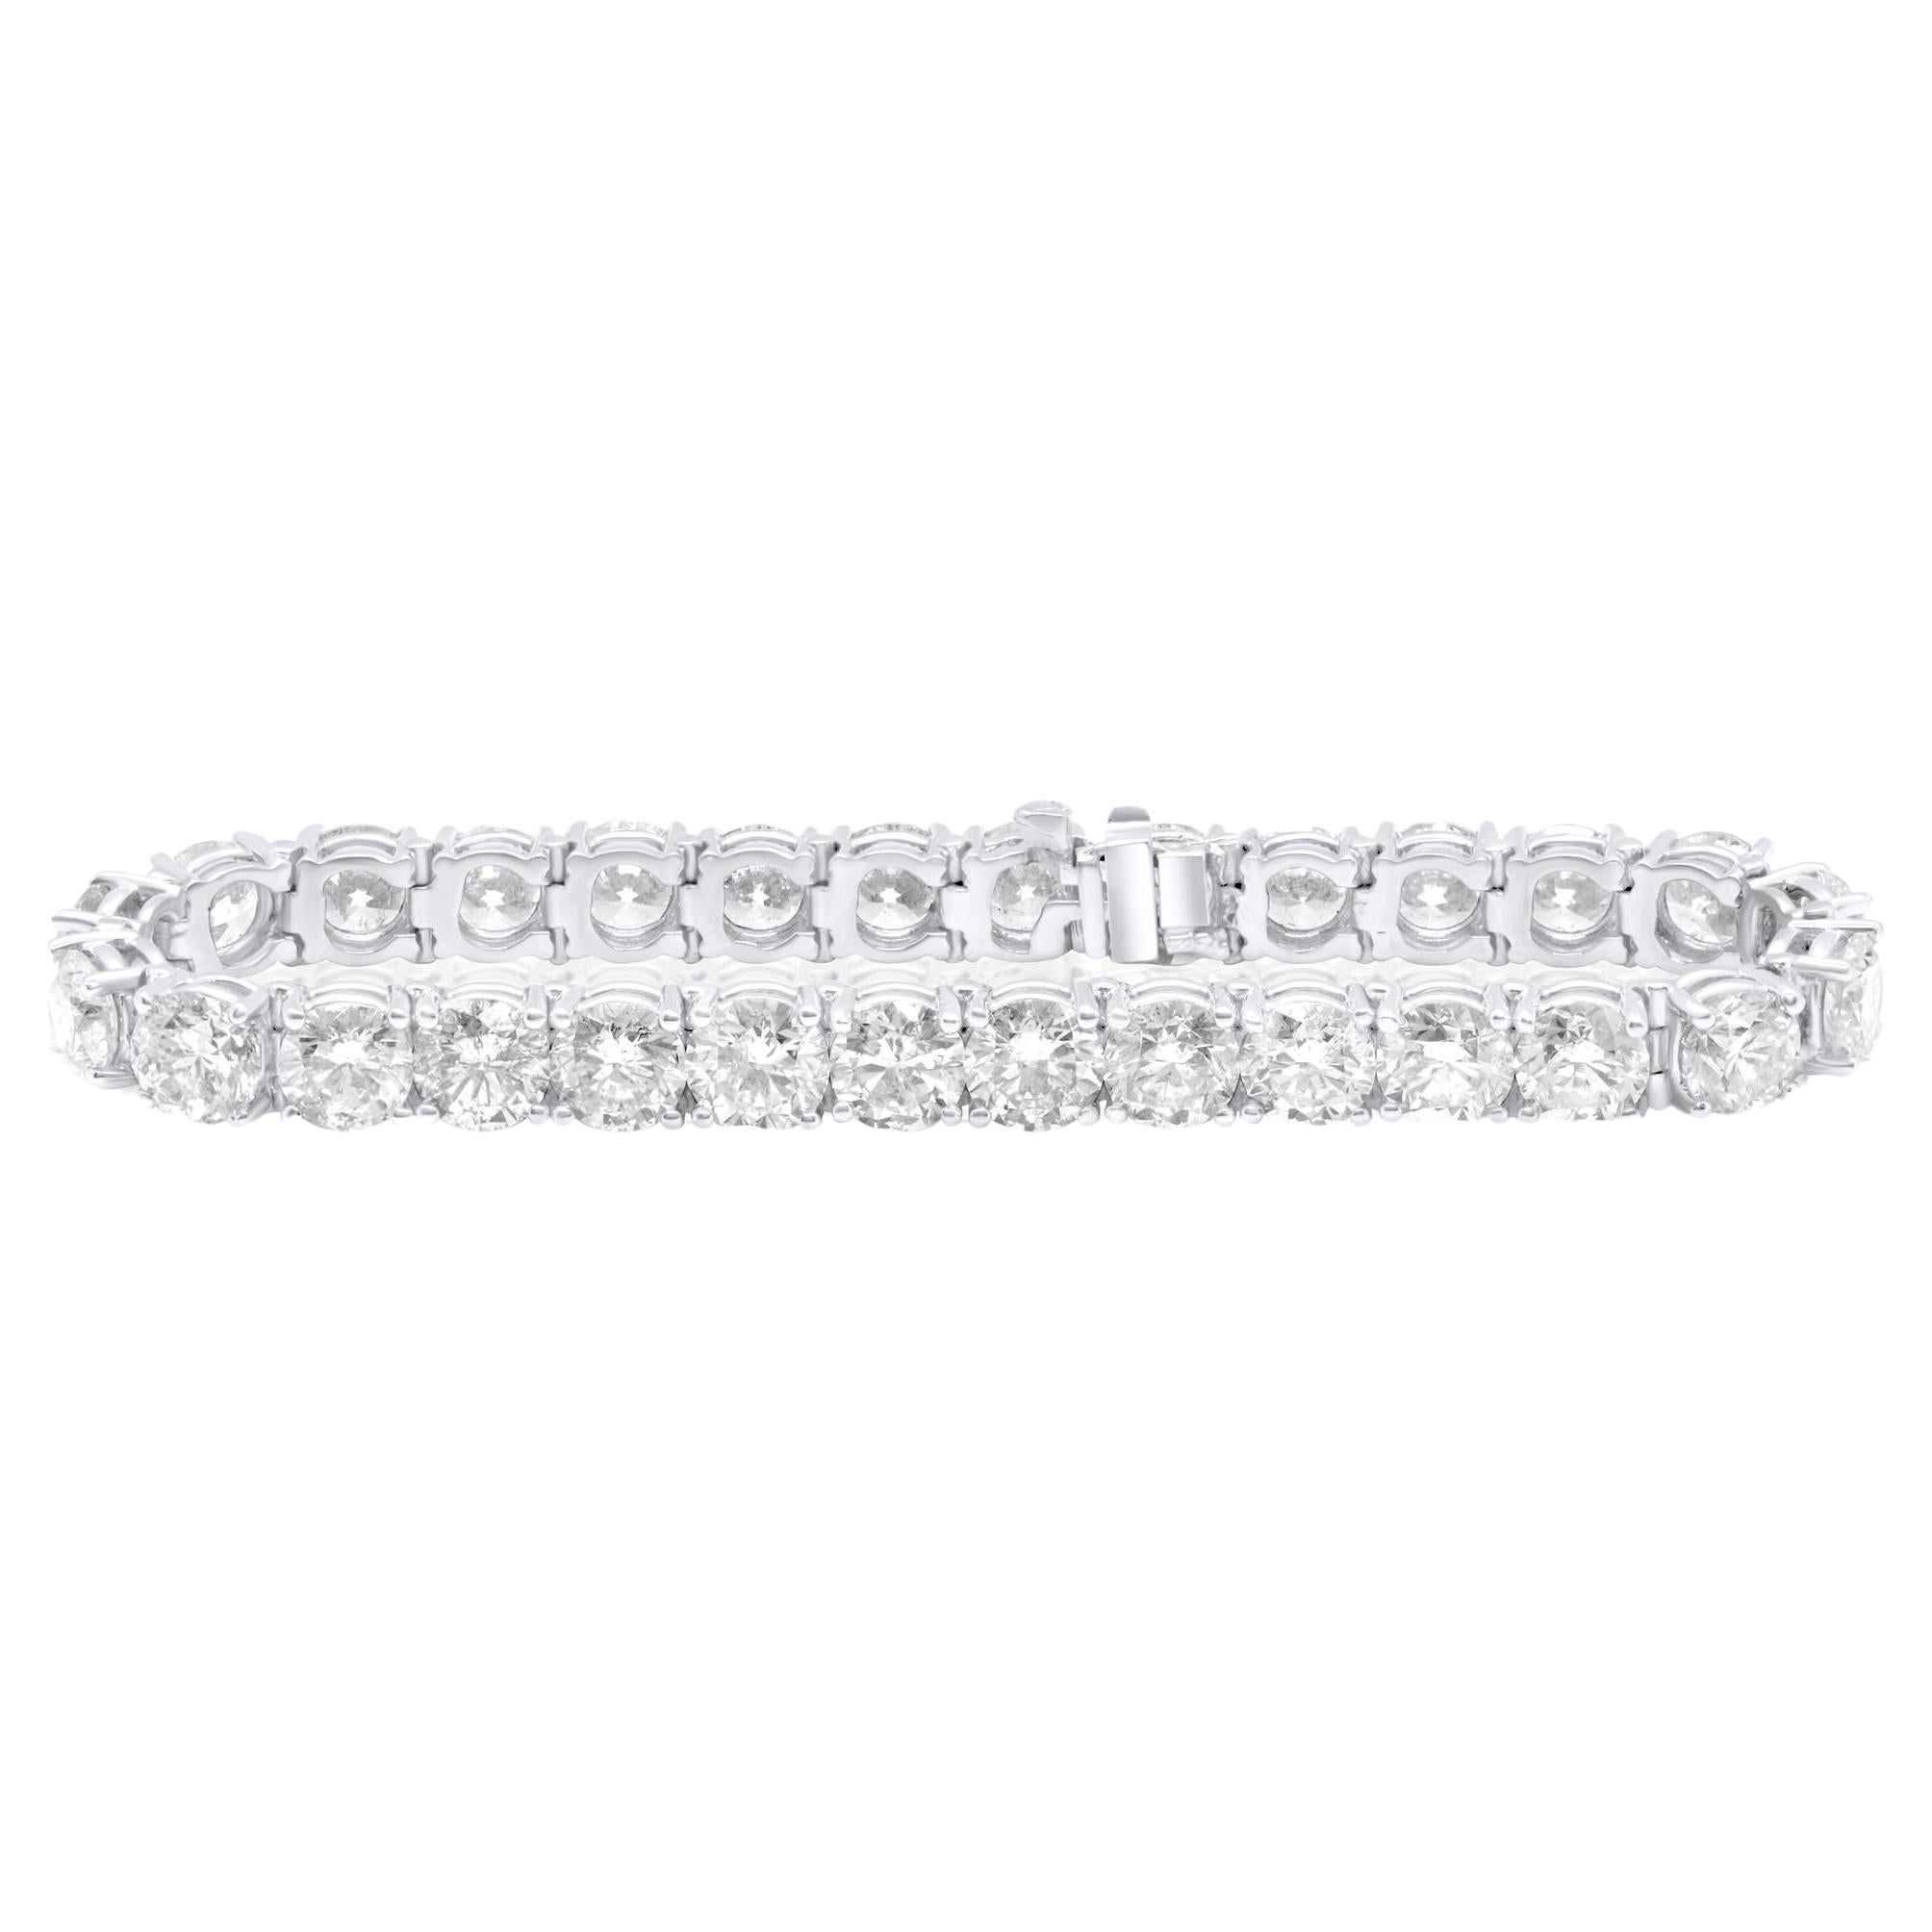 Diana M. 18 kt WG classic tennis Bracelet 14.65 cts diamonds 4 ptong 36 st For Sale